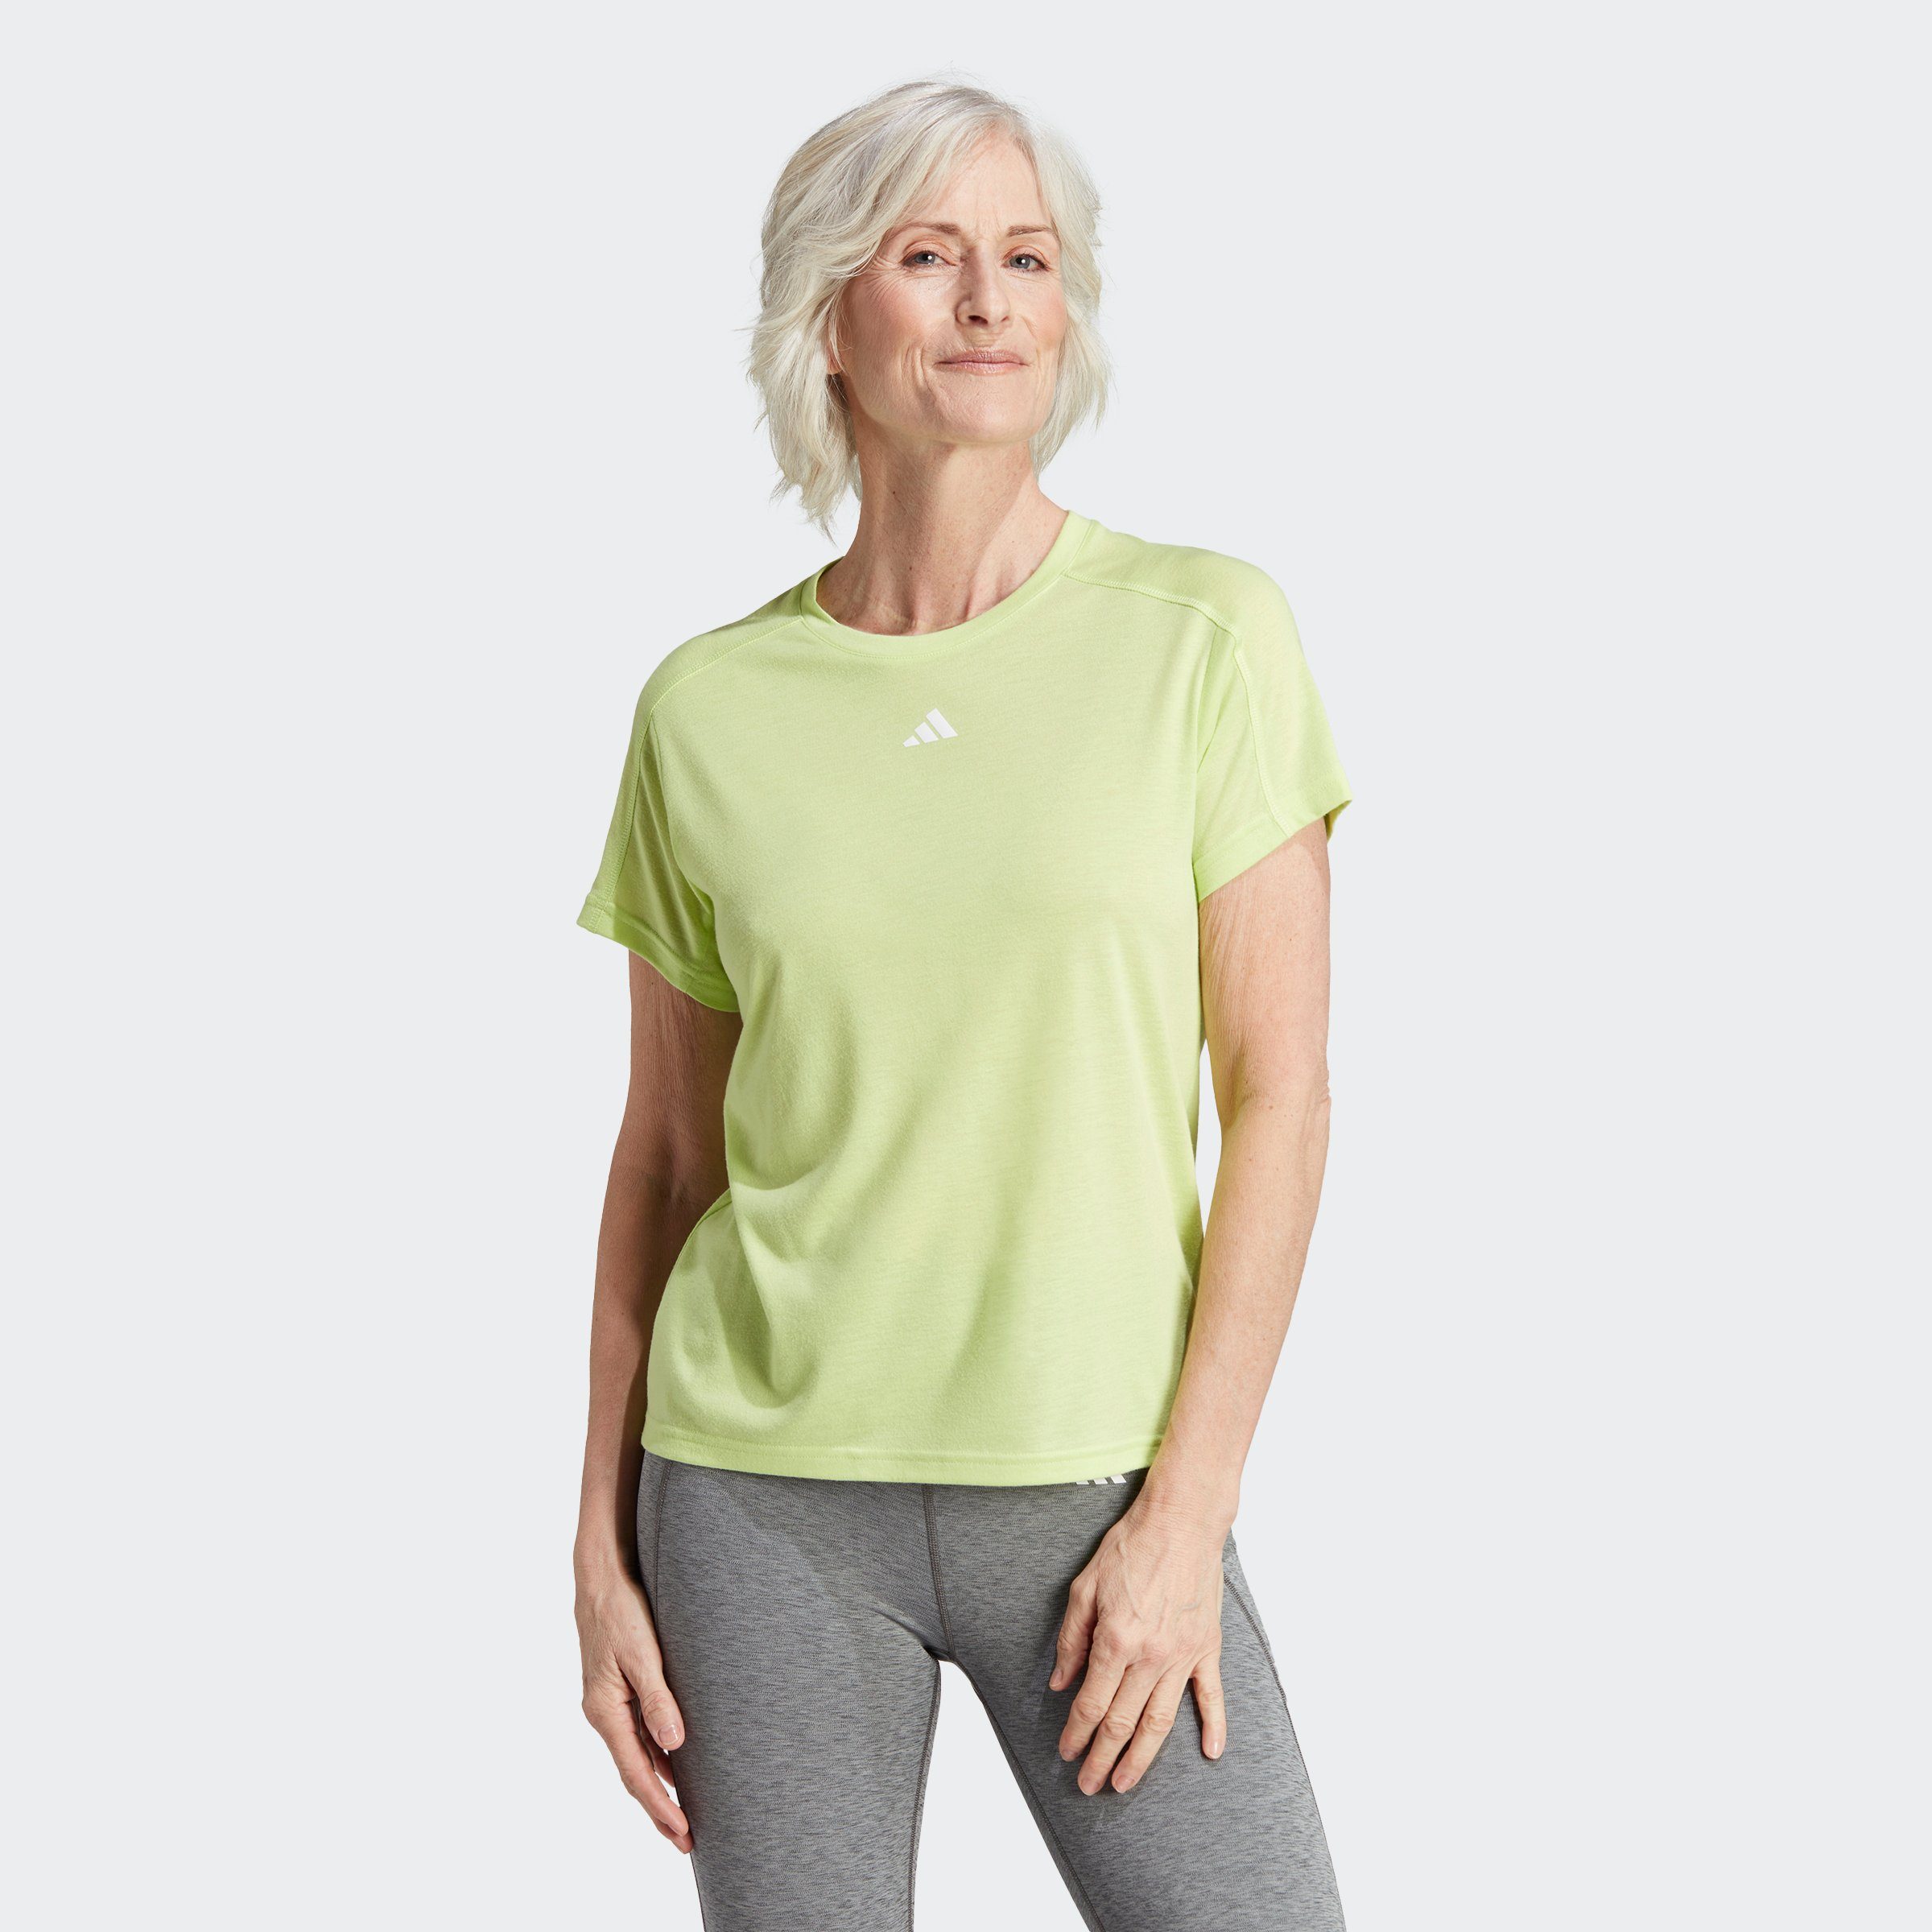 begrenzte Zeit verfügbar adidas Performance T-Shirt AEROREADY TRAIN ESSENTIALS Pulse Lime BRANDING MINIMAL